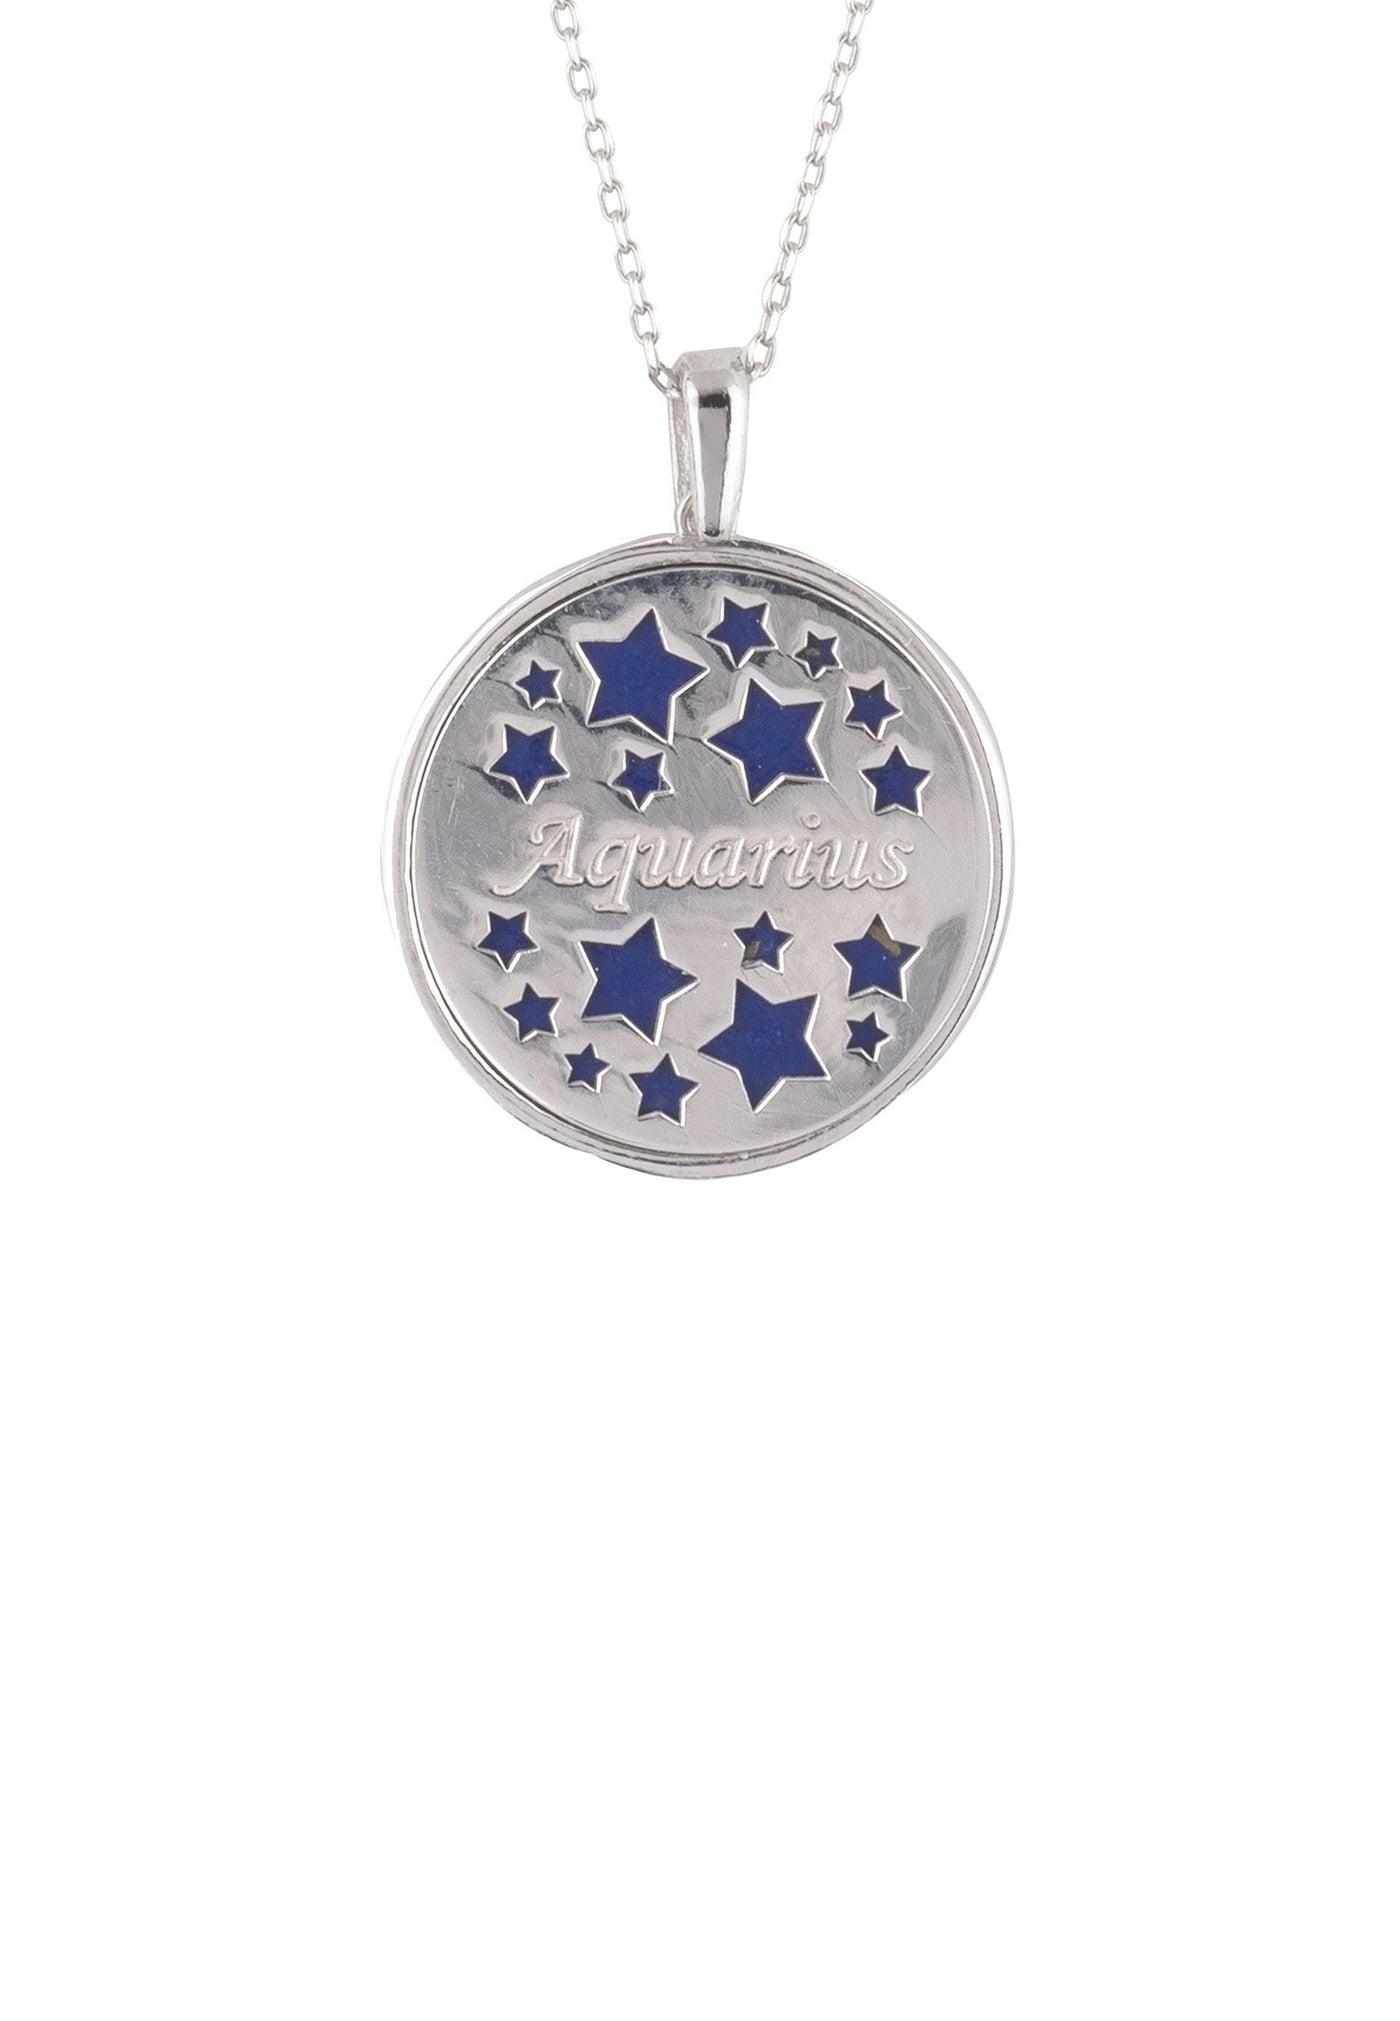 Aquarius necklace - 925 sterling silver - lapis lazuli with white zirconia